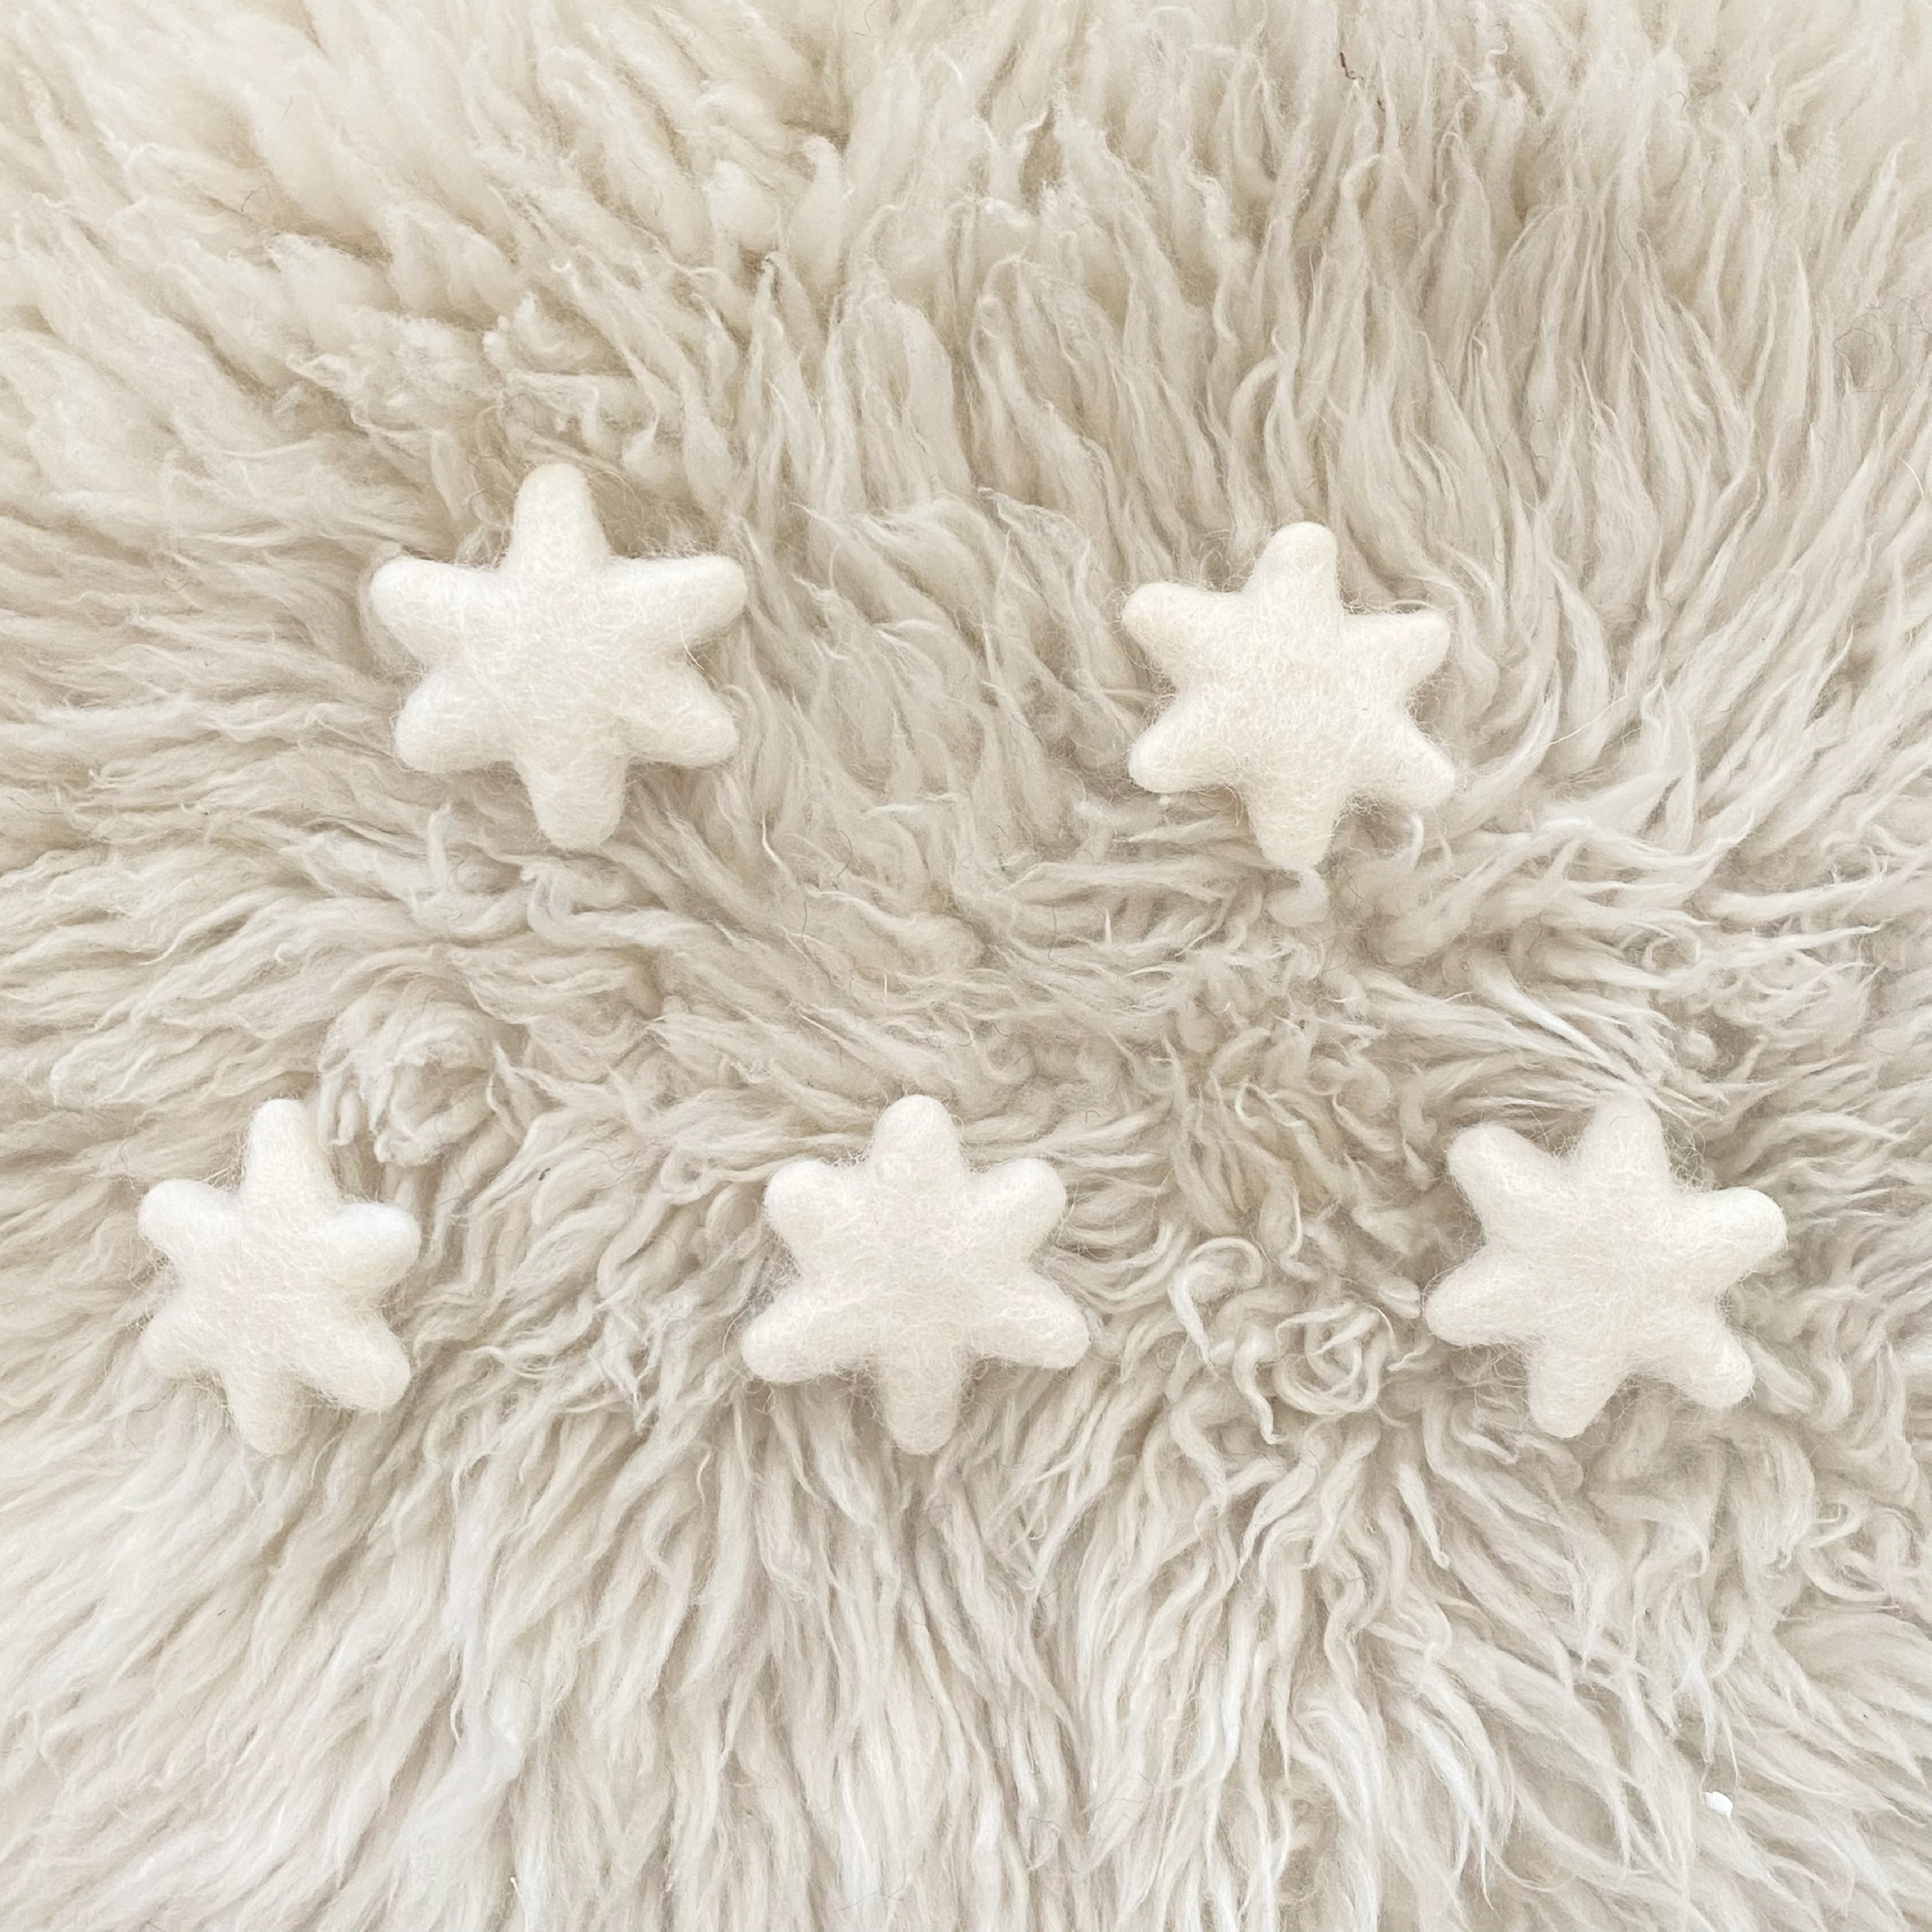 Six-Pointed Stars (White)  Set of 5 – Sheep Farm Felt